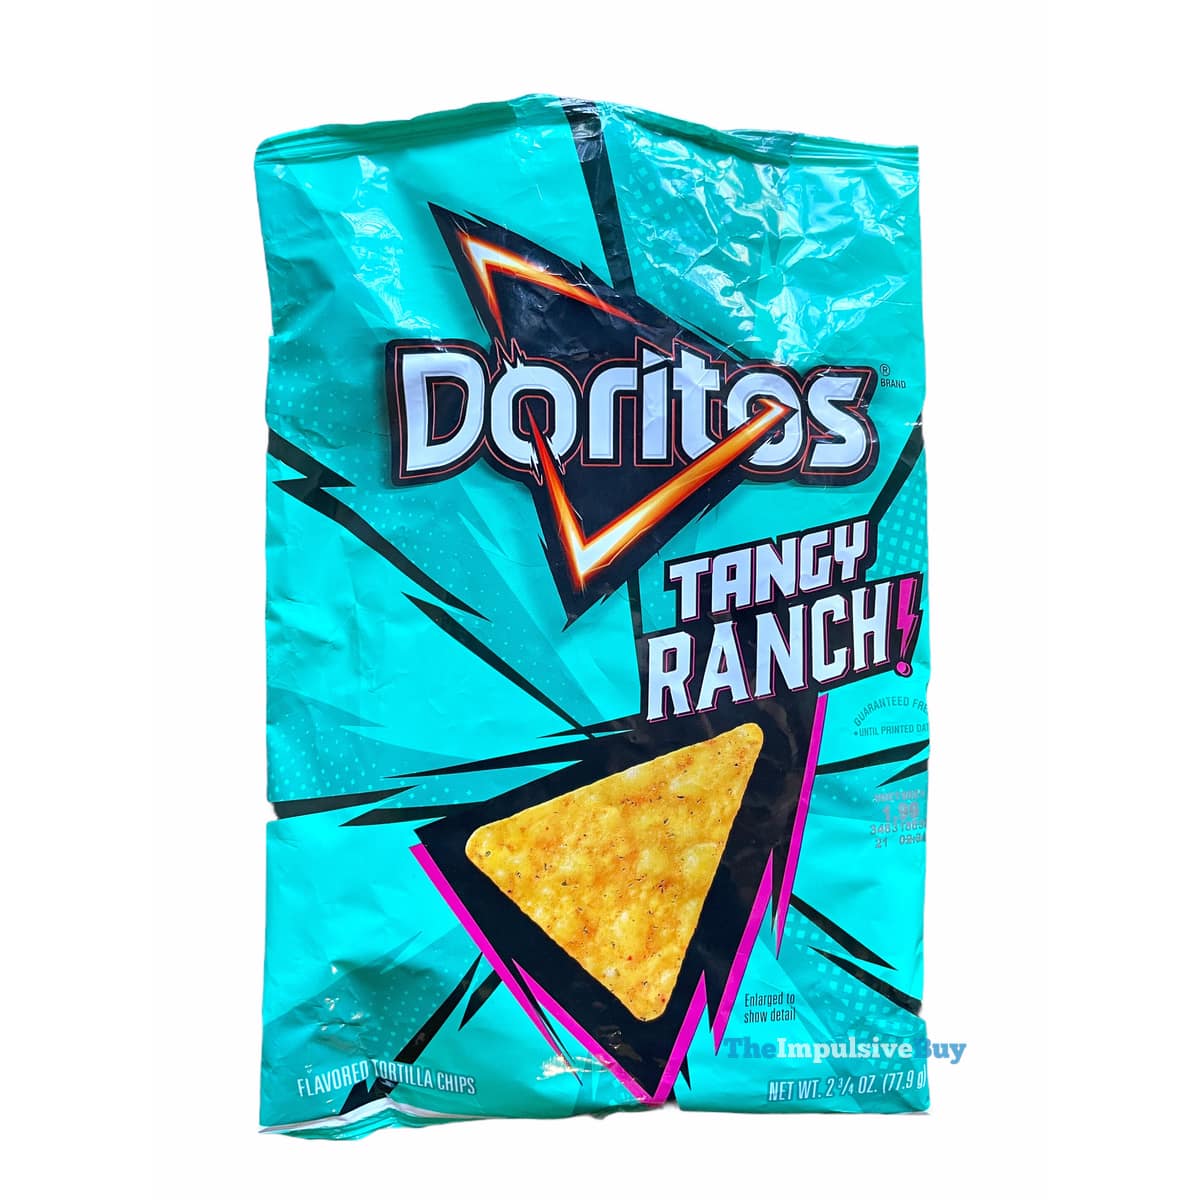 REVIEW: Doritos Tangy Ranch! - The Impulsive Buy